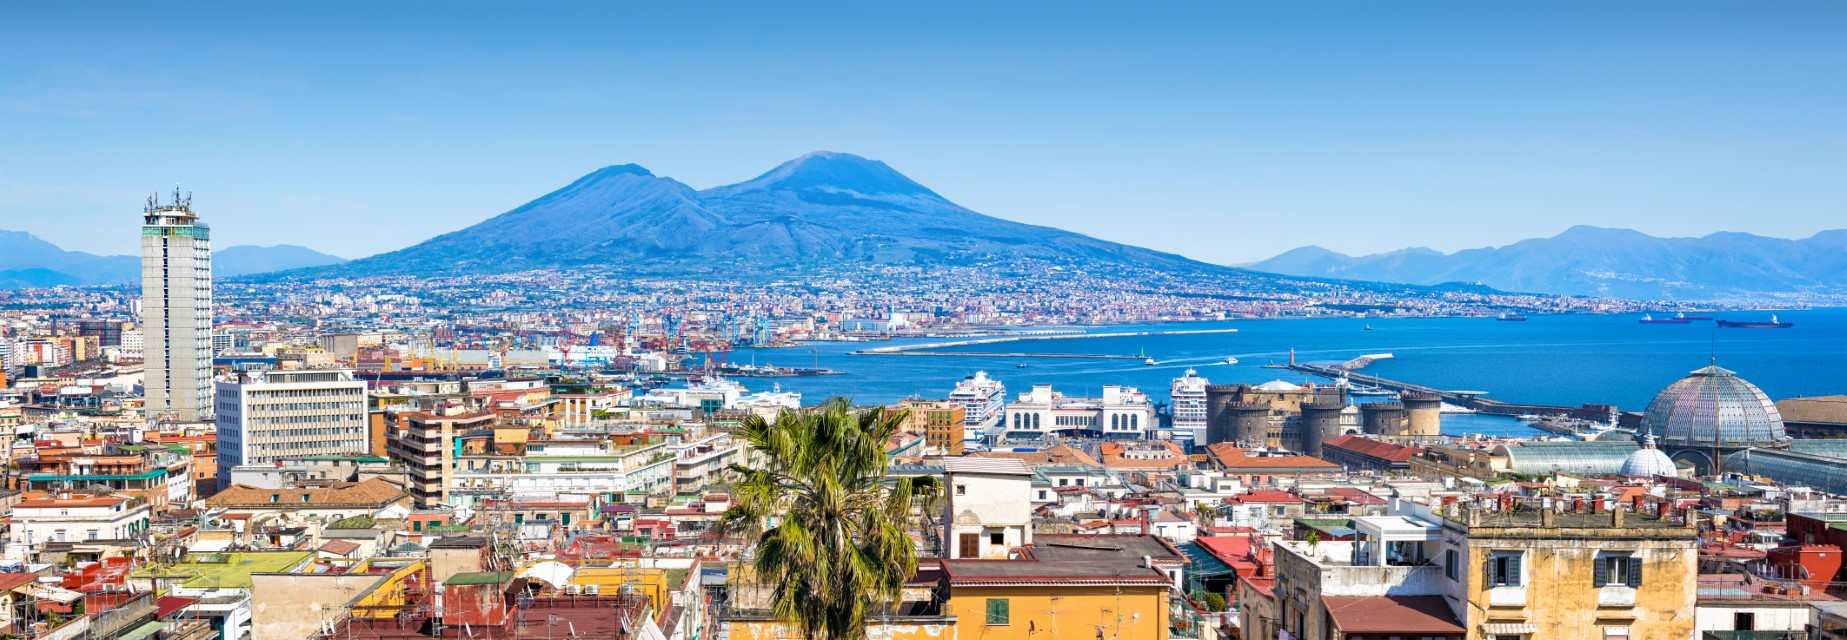 Hotele w Neapolu, Panoramic view of Naples, sea port in Gulf of Naples and Mount Vesuvius, Campania region, Italy.